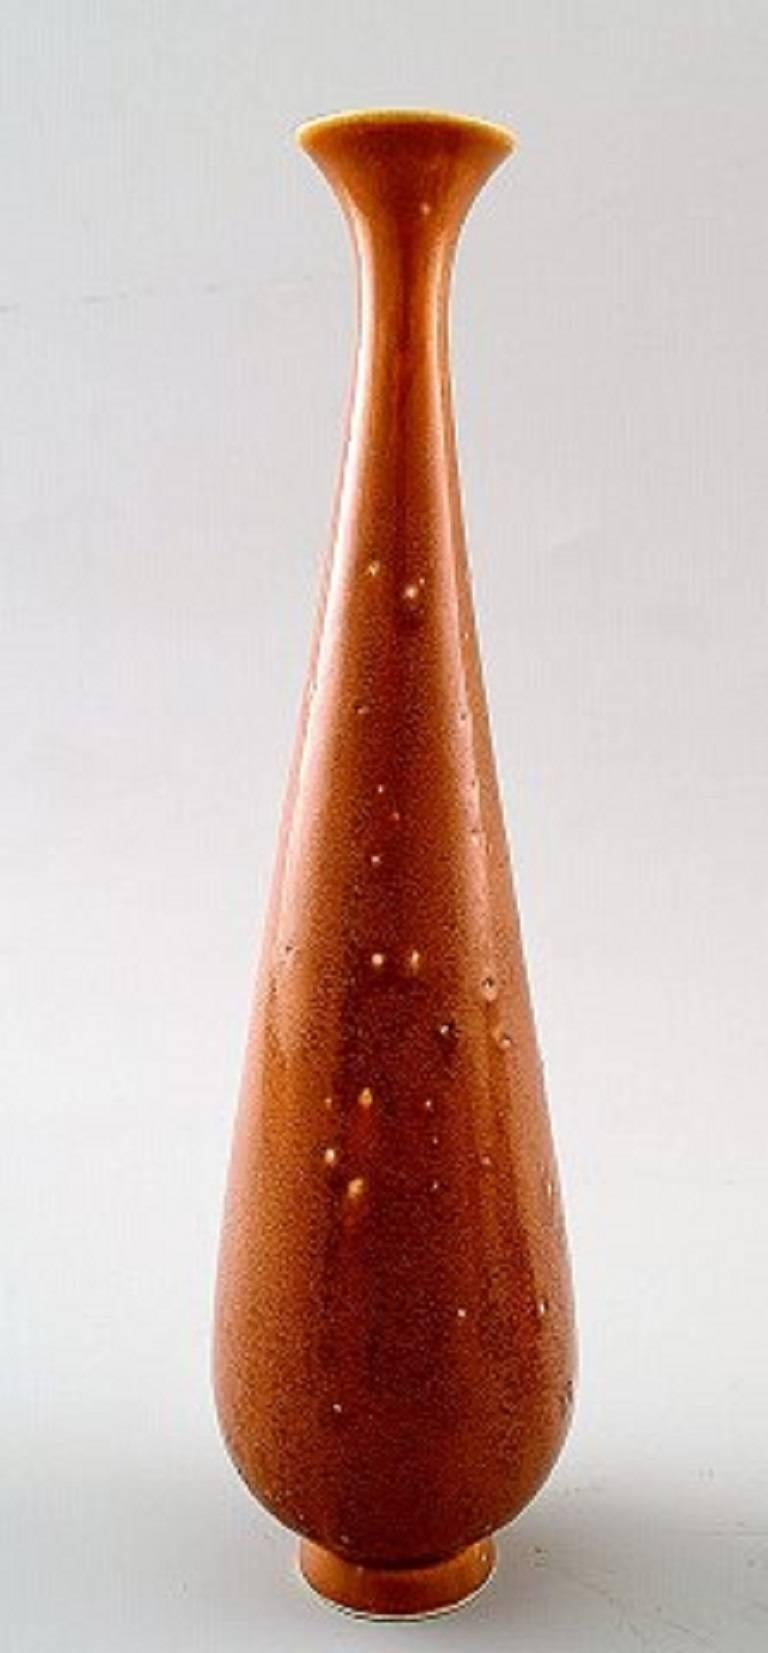 Yngve Blixt for Höganäs, collection of unique ceramic vases in brown glazes.
Sweden 1950-1960s.
Stamped.
The tallest measures 18 cm.